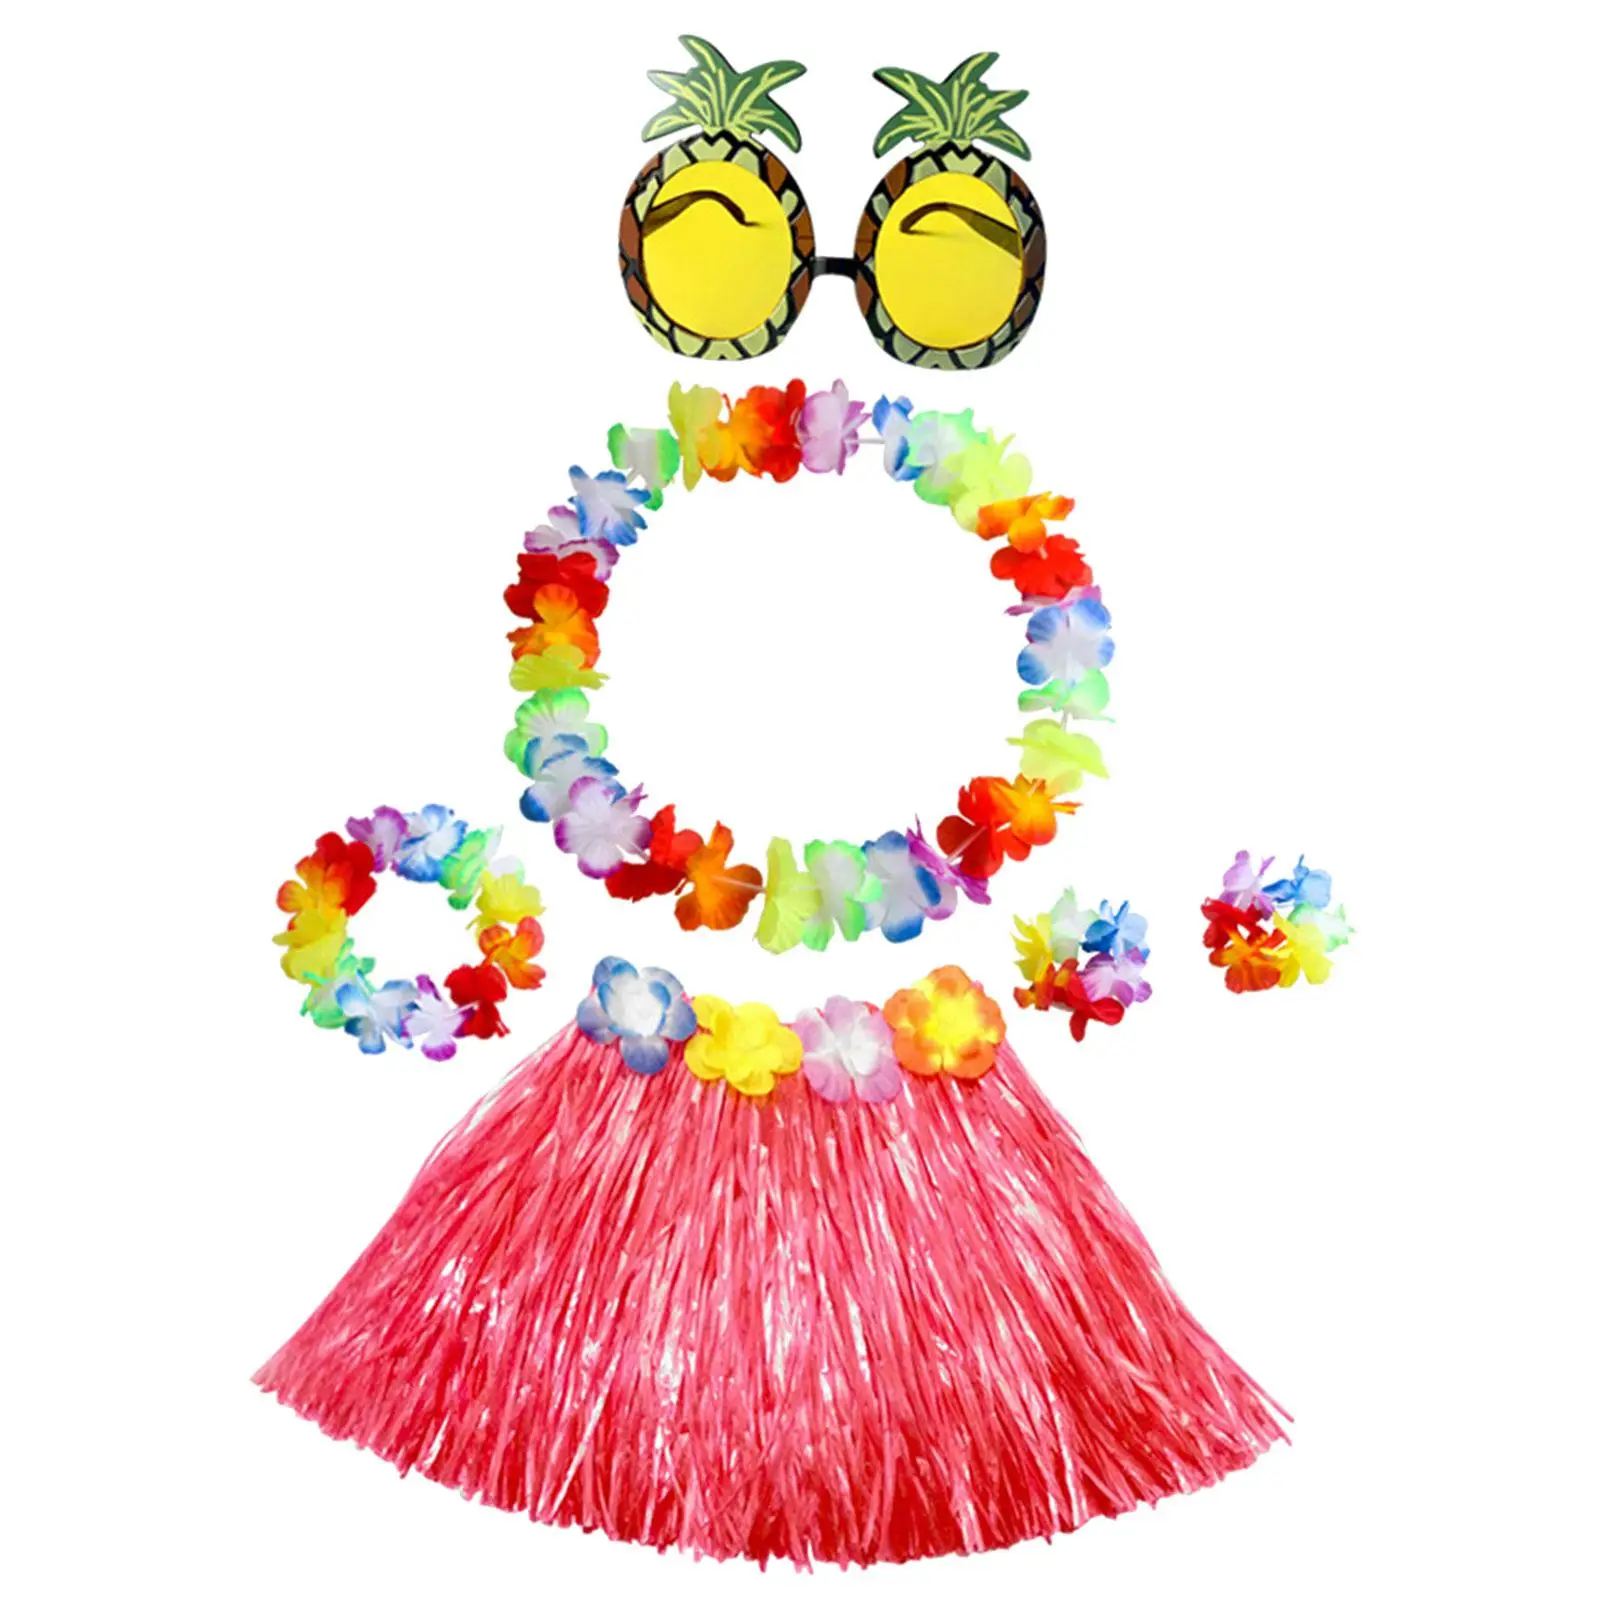 Hawaiian Grass Skirt Reusable Novelty Necklace Costume Fancy Dress for Birthday